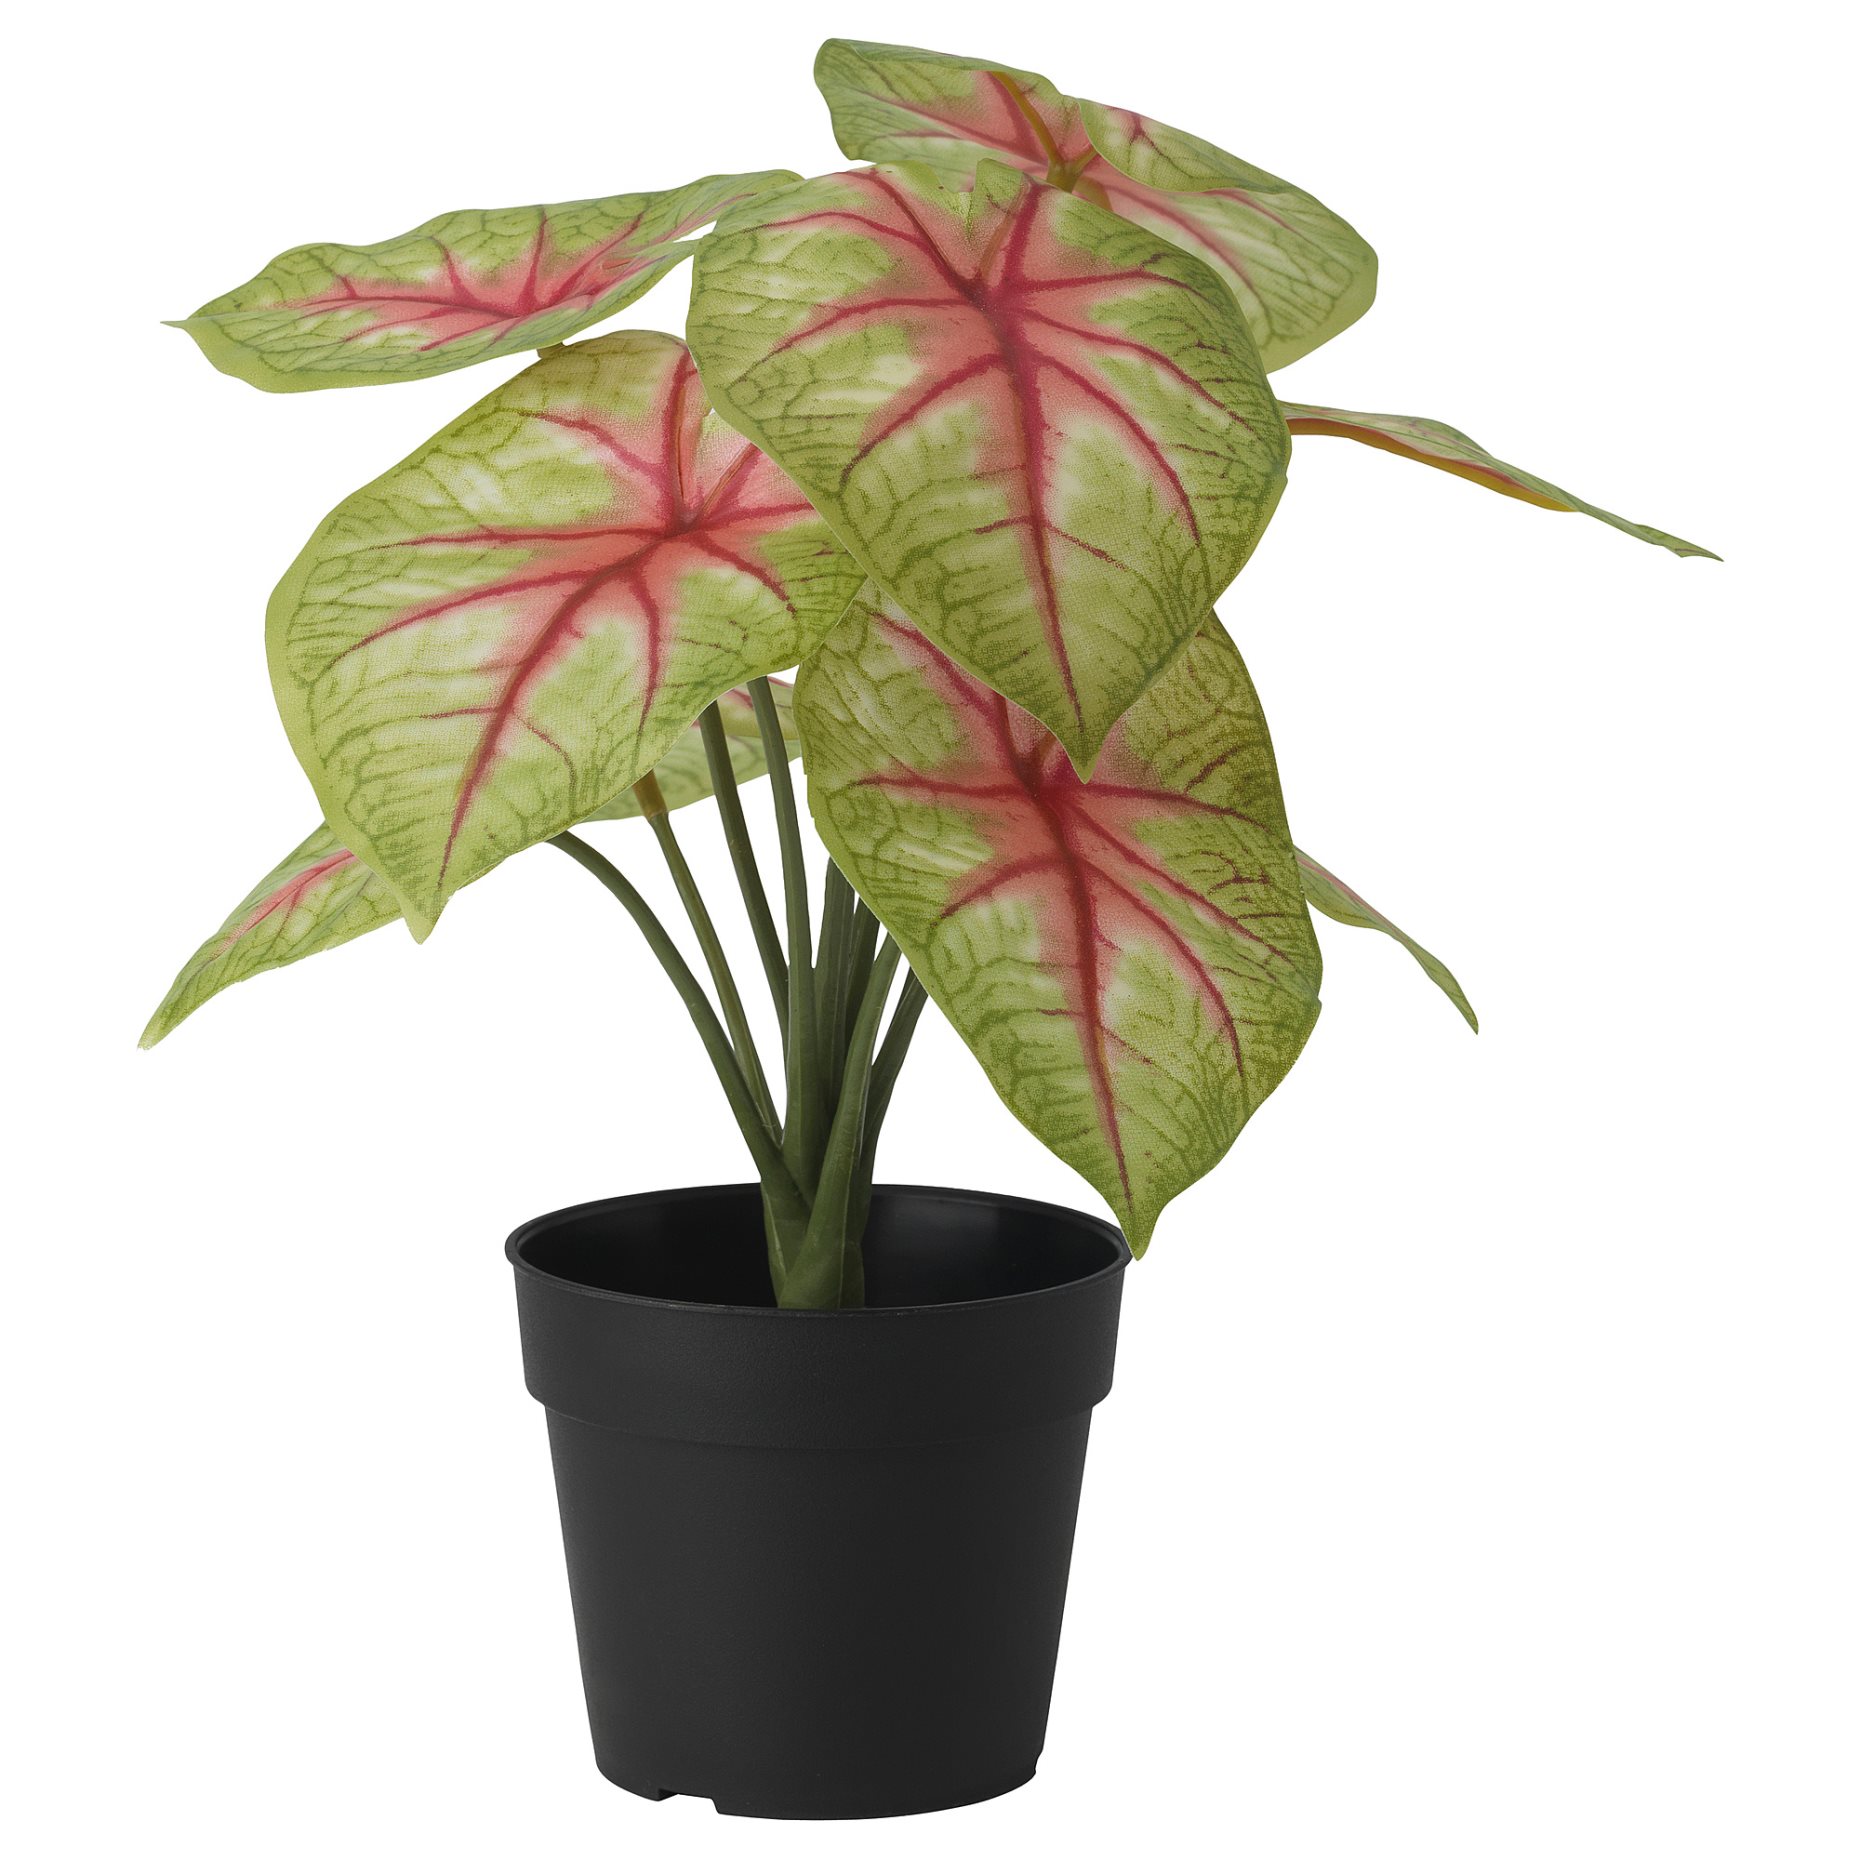 FEJKA, τεχνητό φυτό σε γλάστρα εσωτερικού/εξωτερικού χώρου/Καλάδιο, 9 cm, 905.596.54